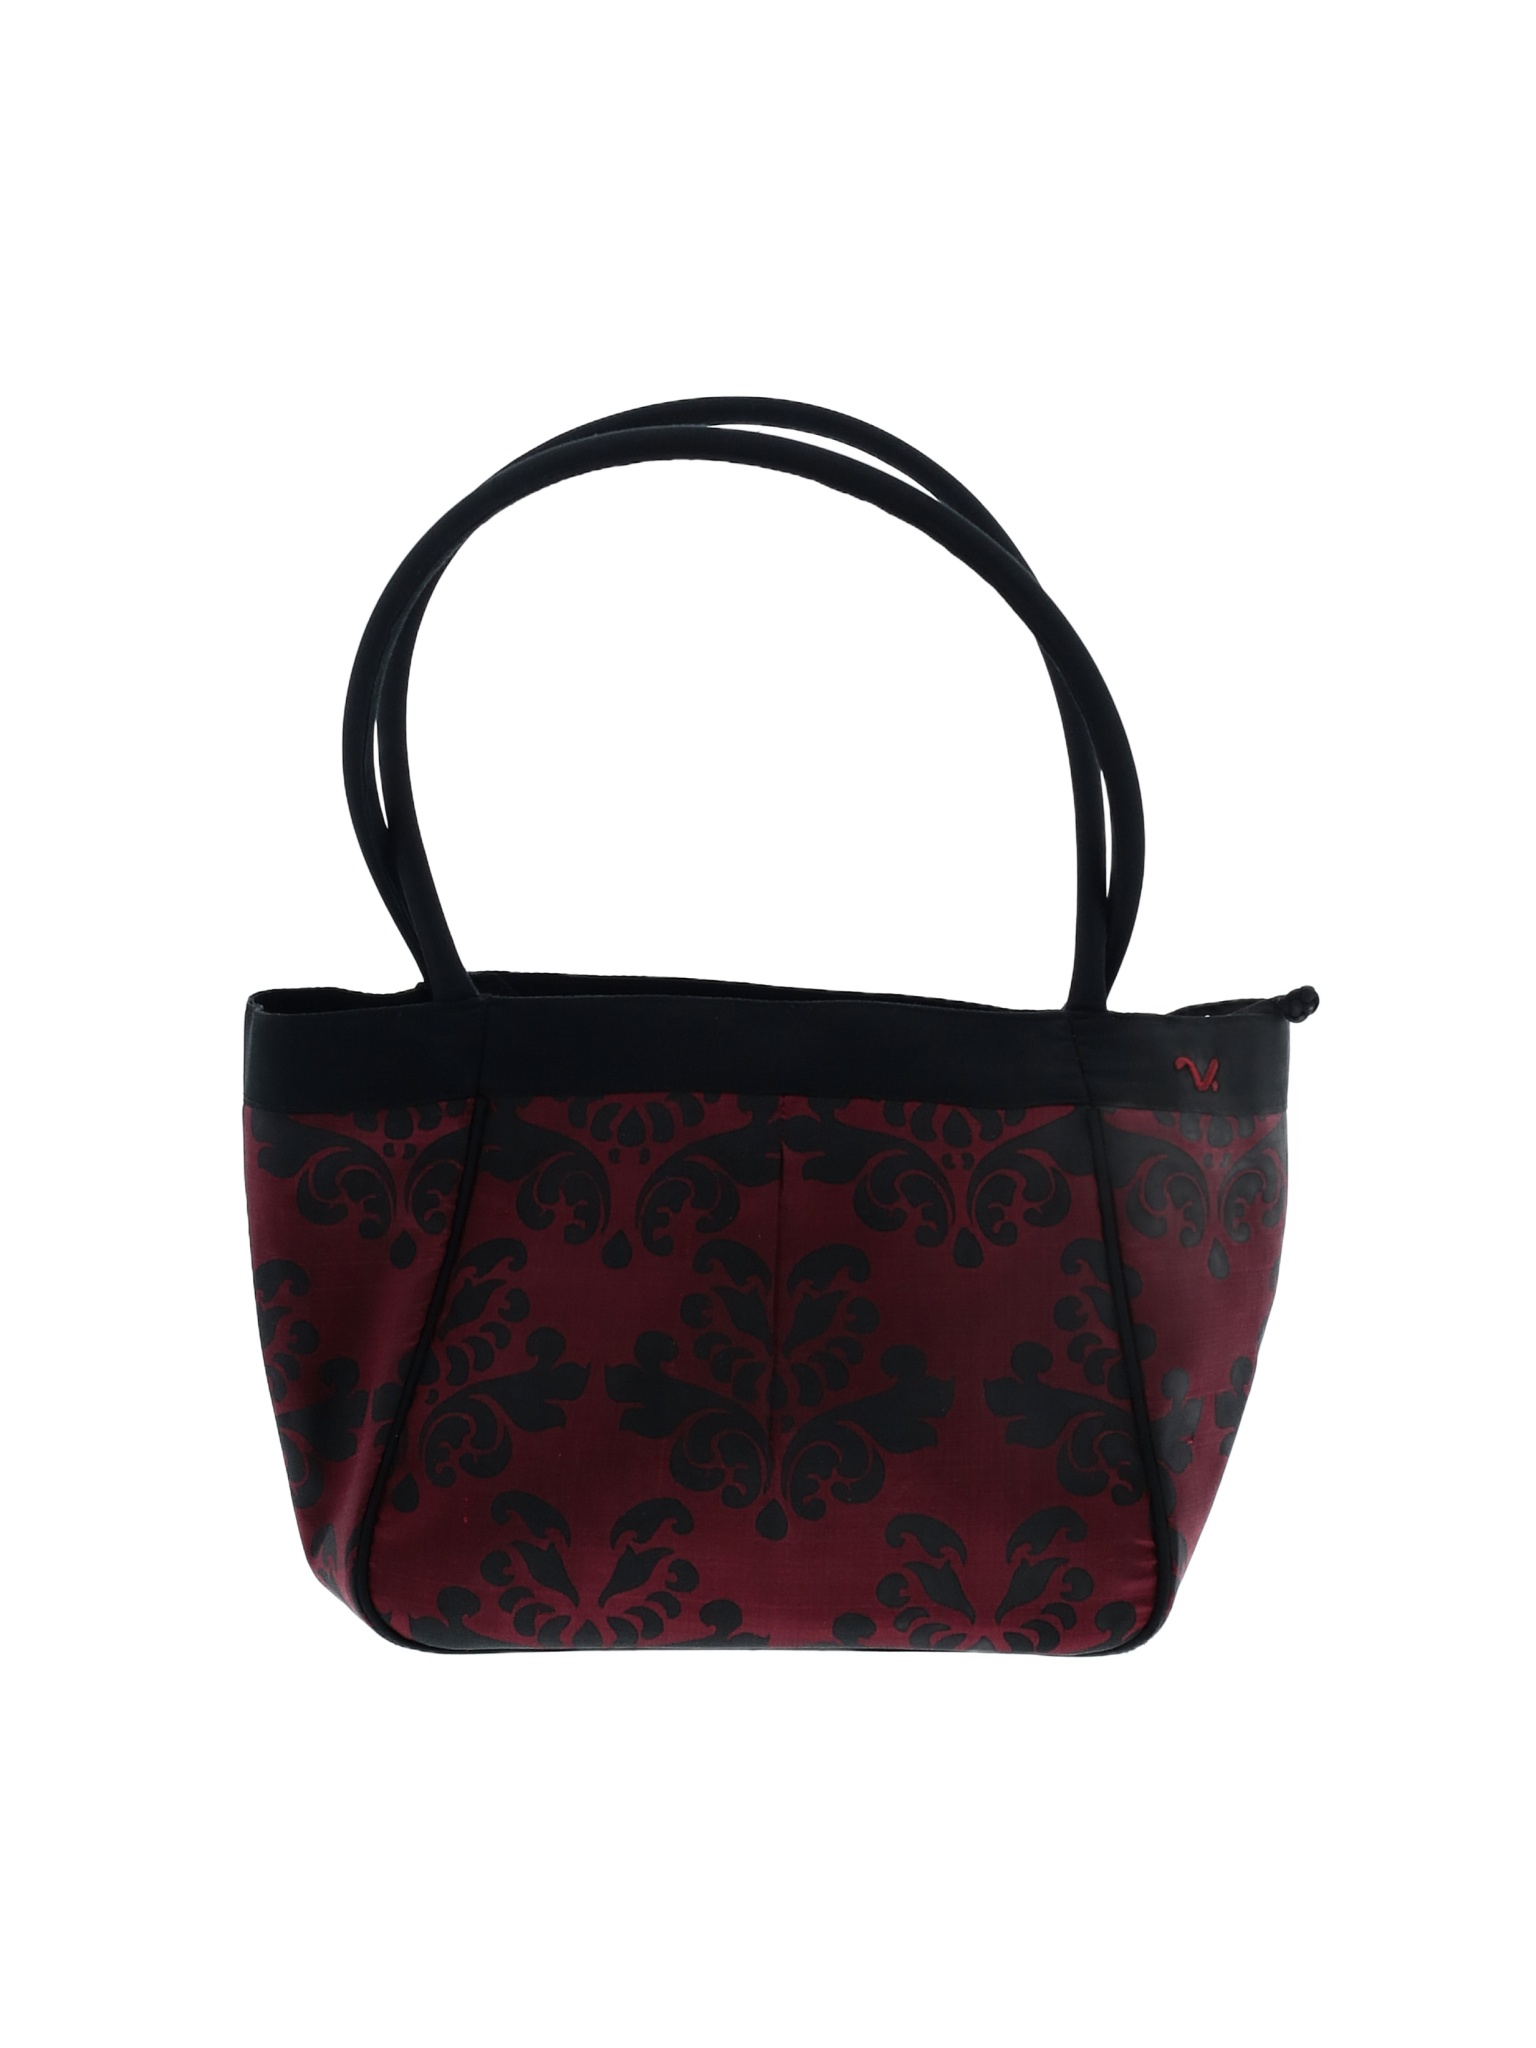 Clare V. Handbags & Accessories: Sale